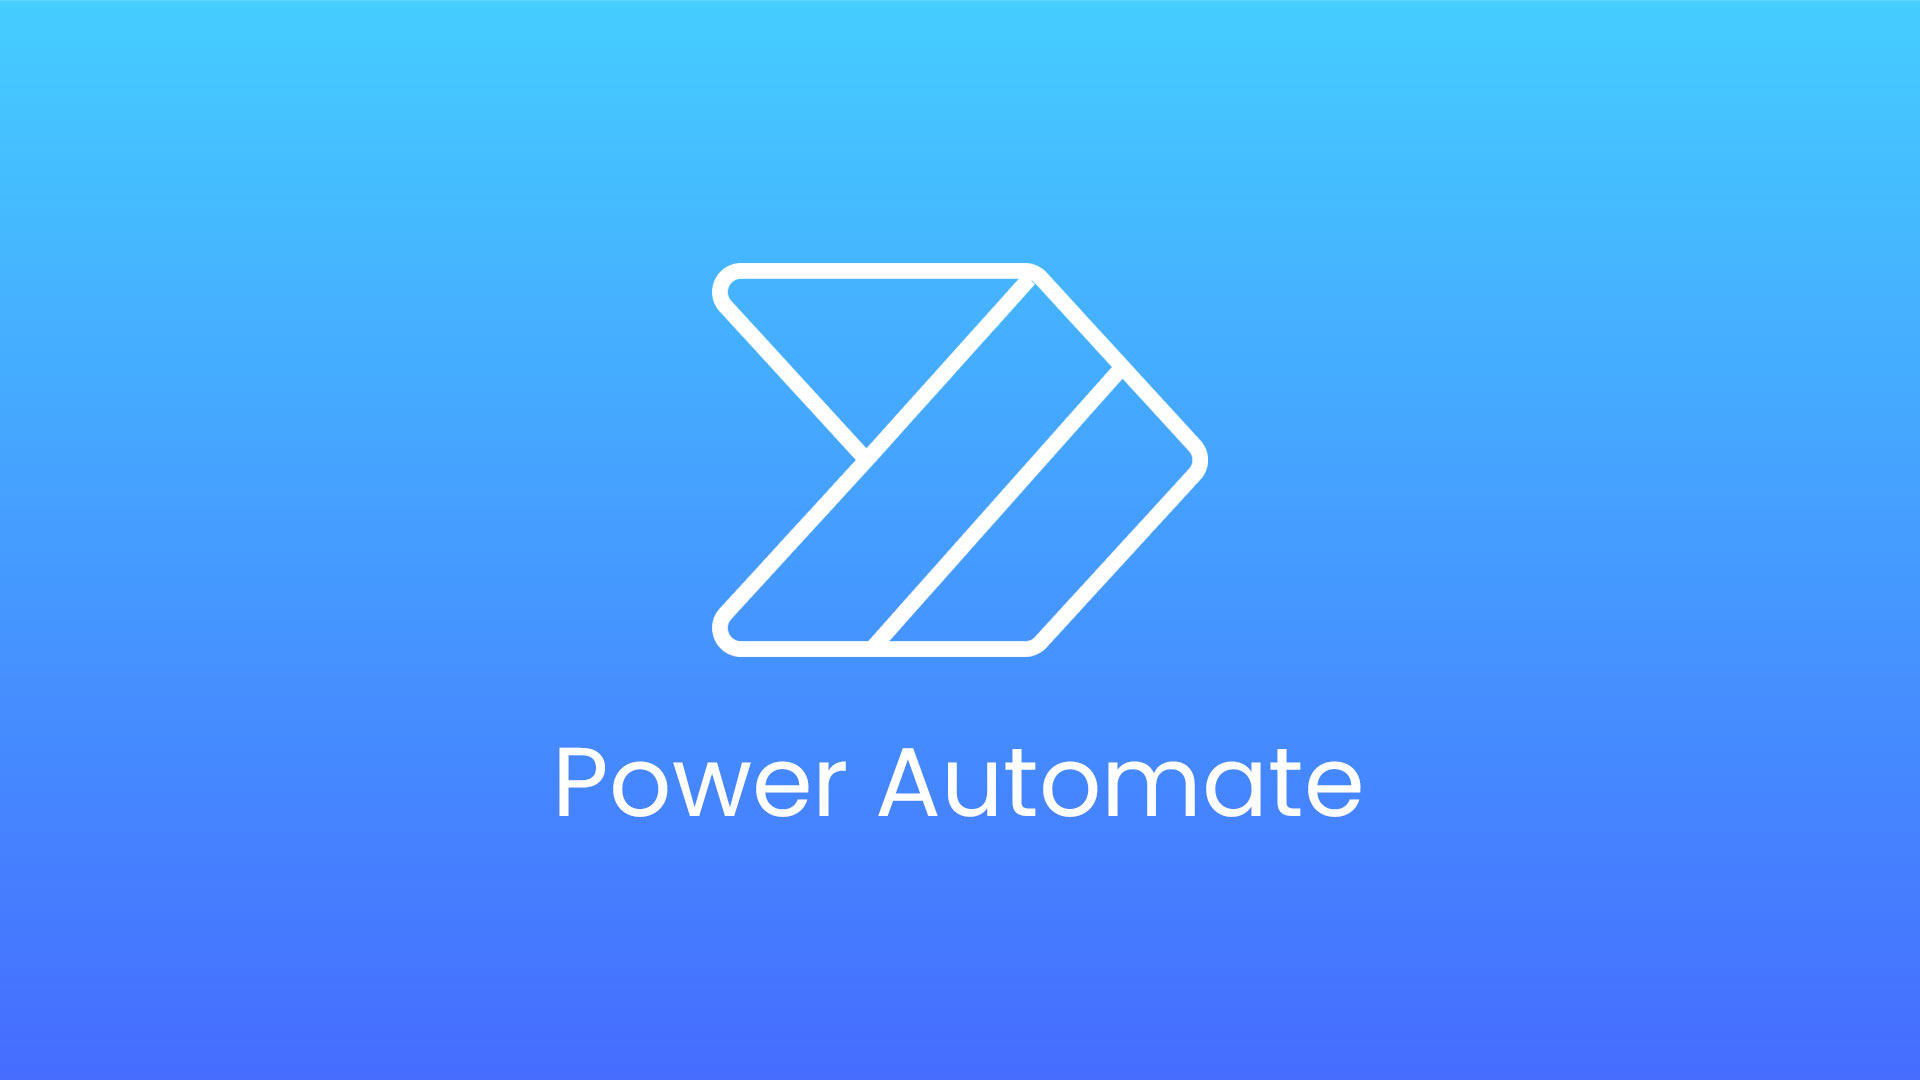 Automating Business Process Using Microsoft Power Automate